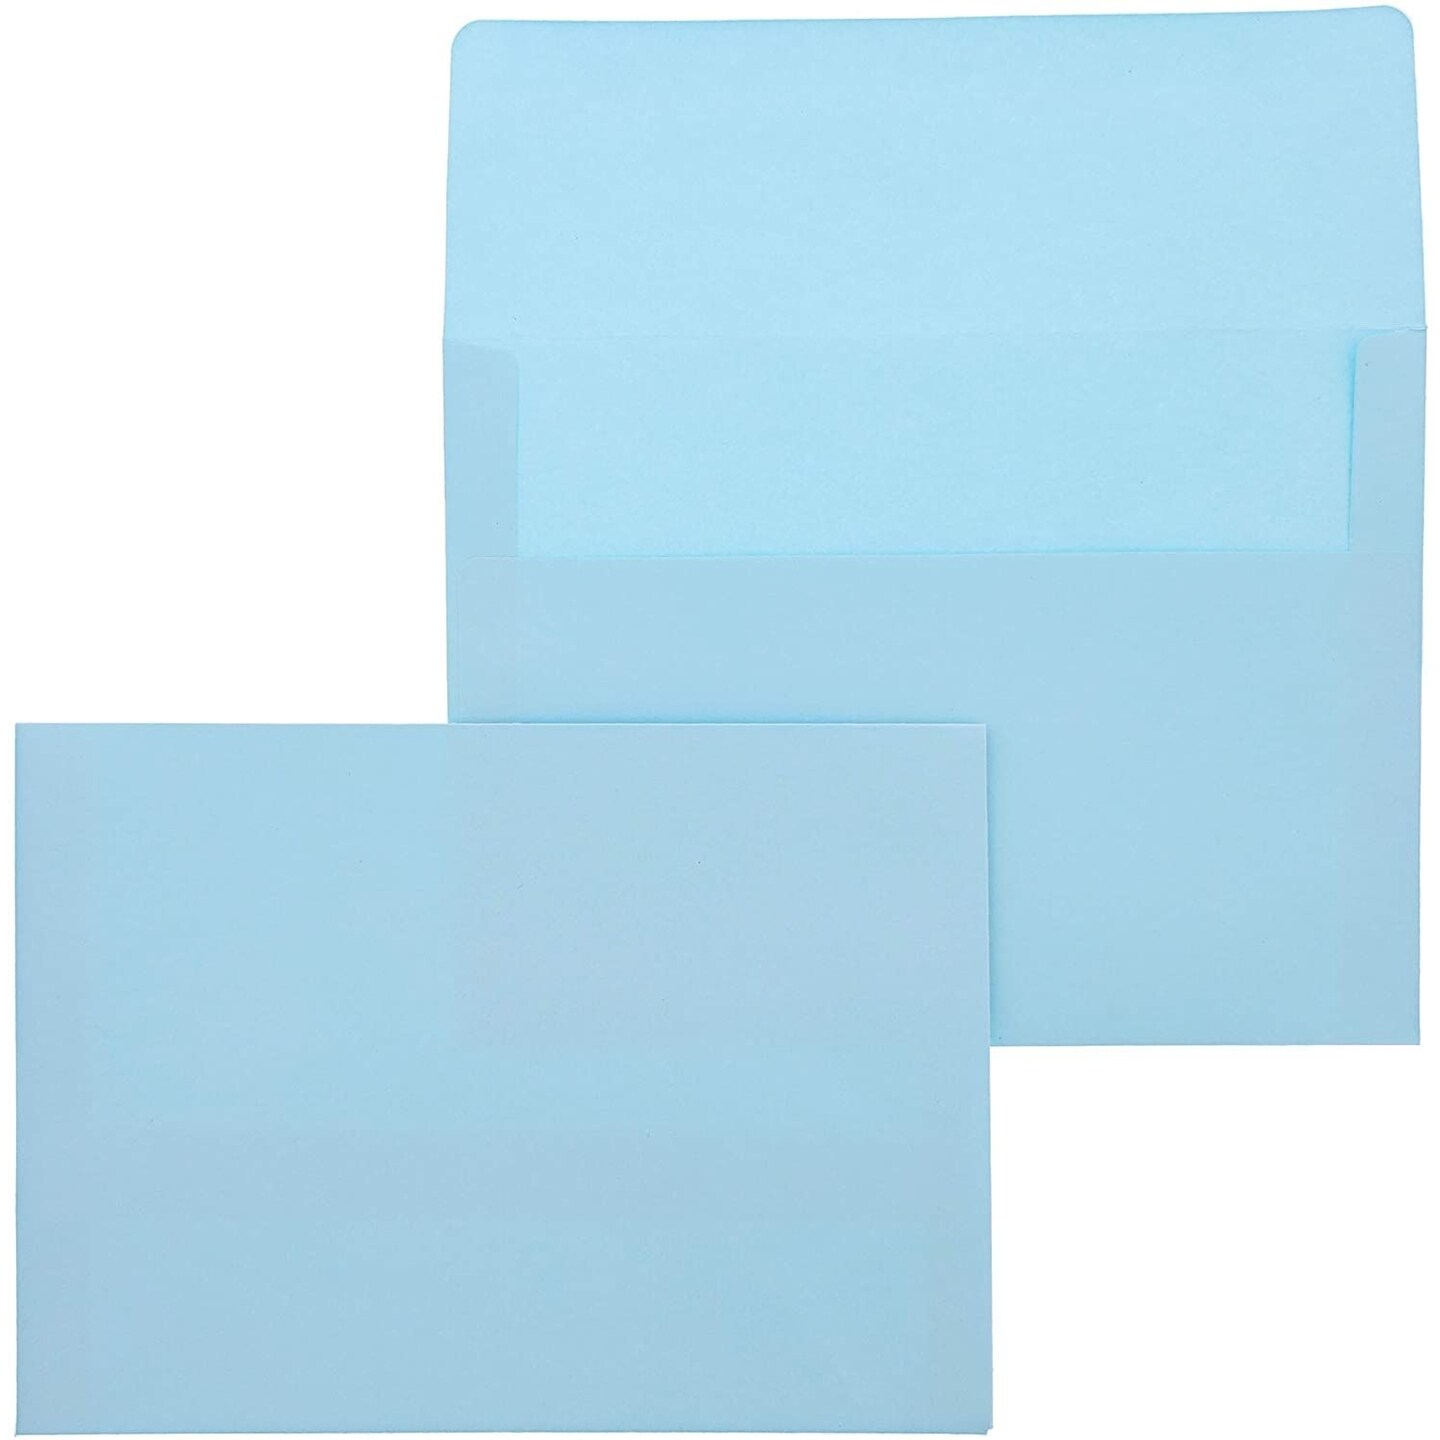 Baby blue envelopes/A7 envelopes/ wedding envelopes/5x7 envelopes/